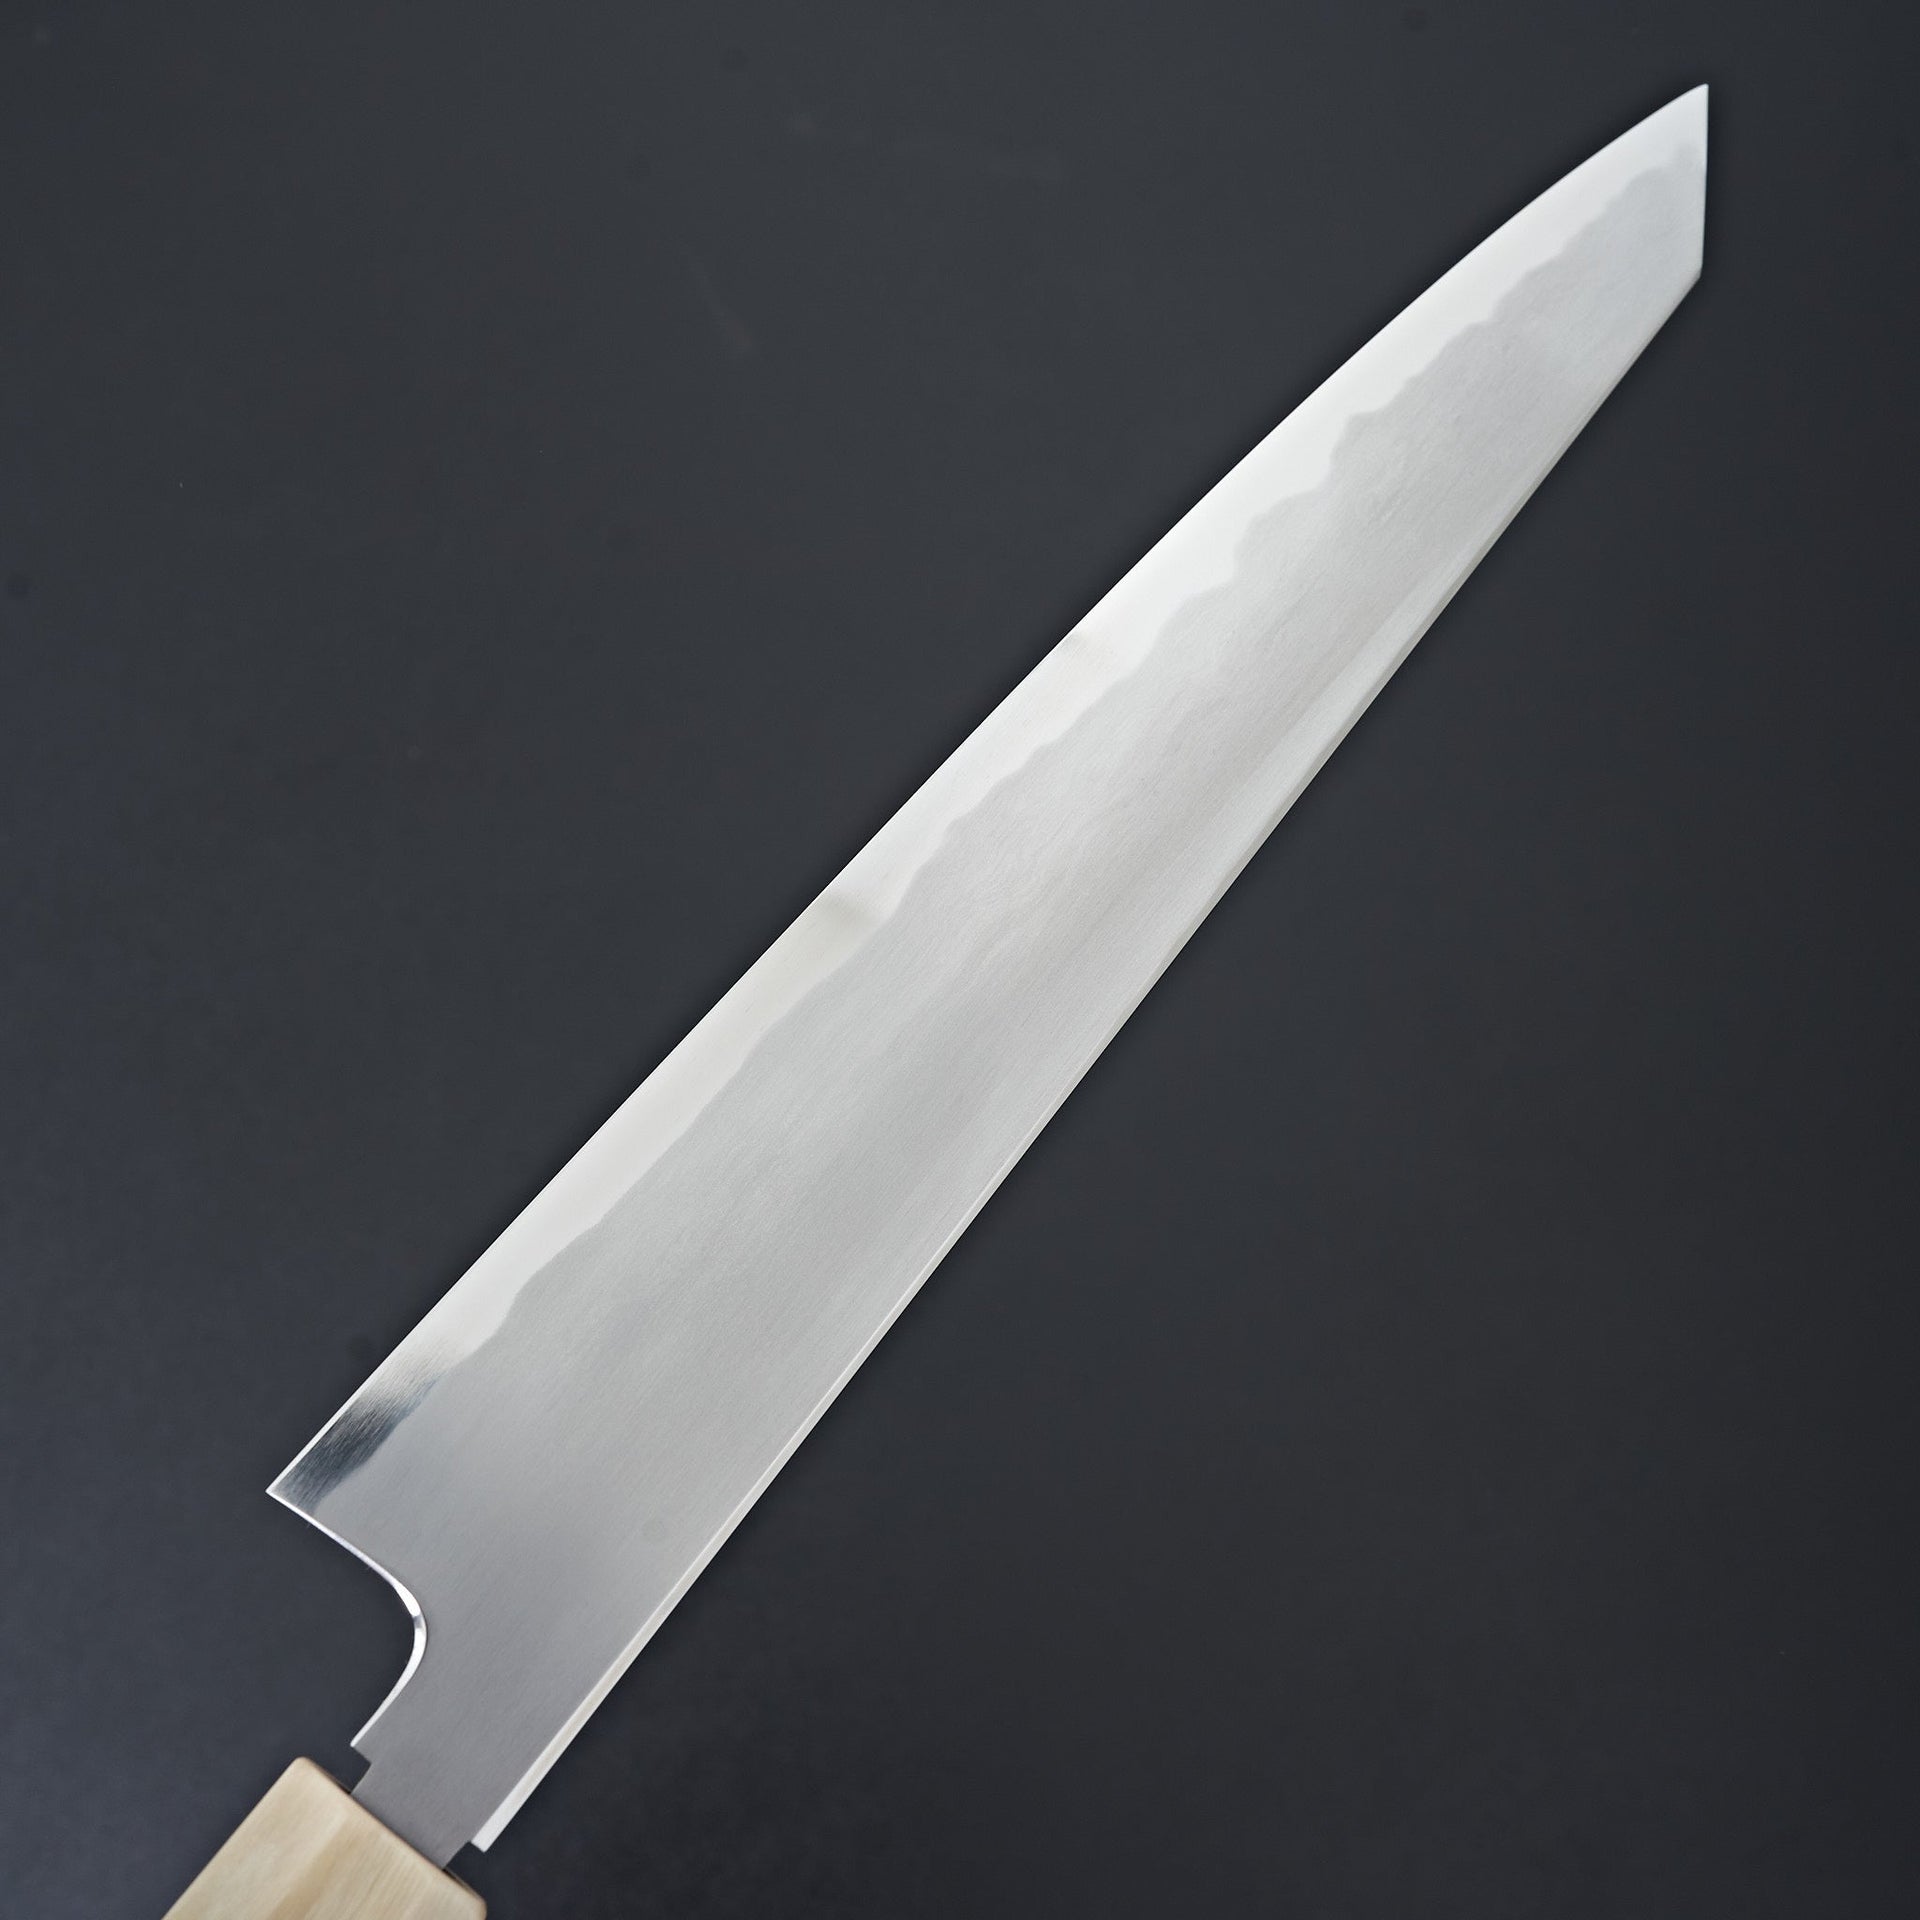 Tetsujin Blue #2 Kasumi Kiritsuke Sujihiki 270mm Taihei Wood Handle-Knife-Hitohira-Carbon Knife Co